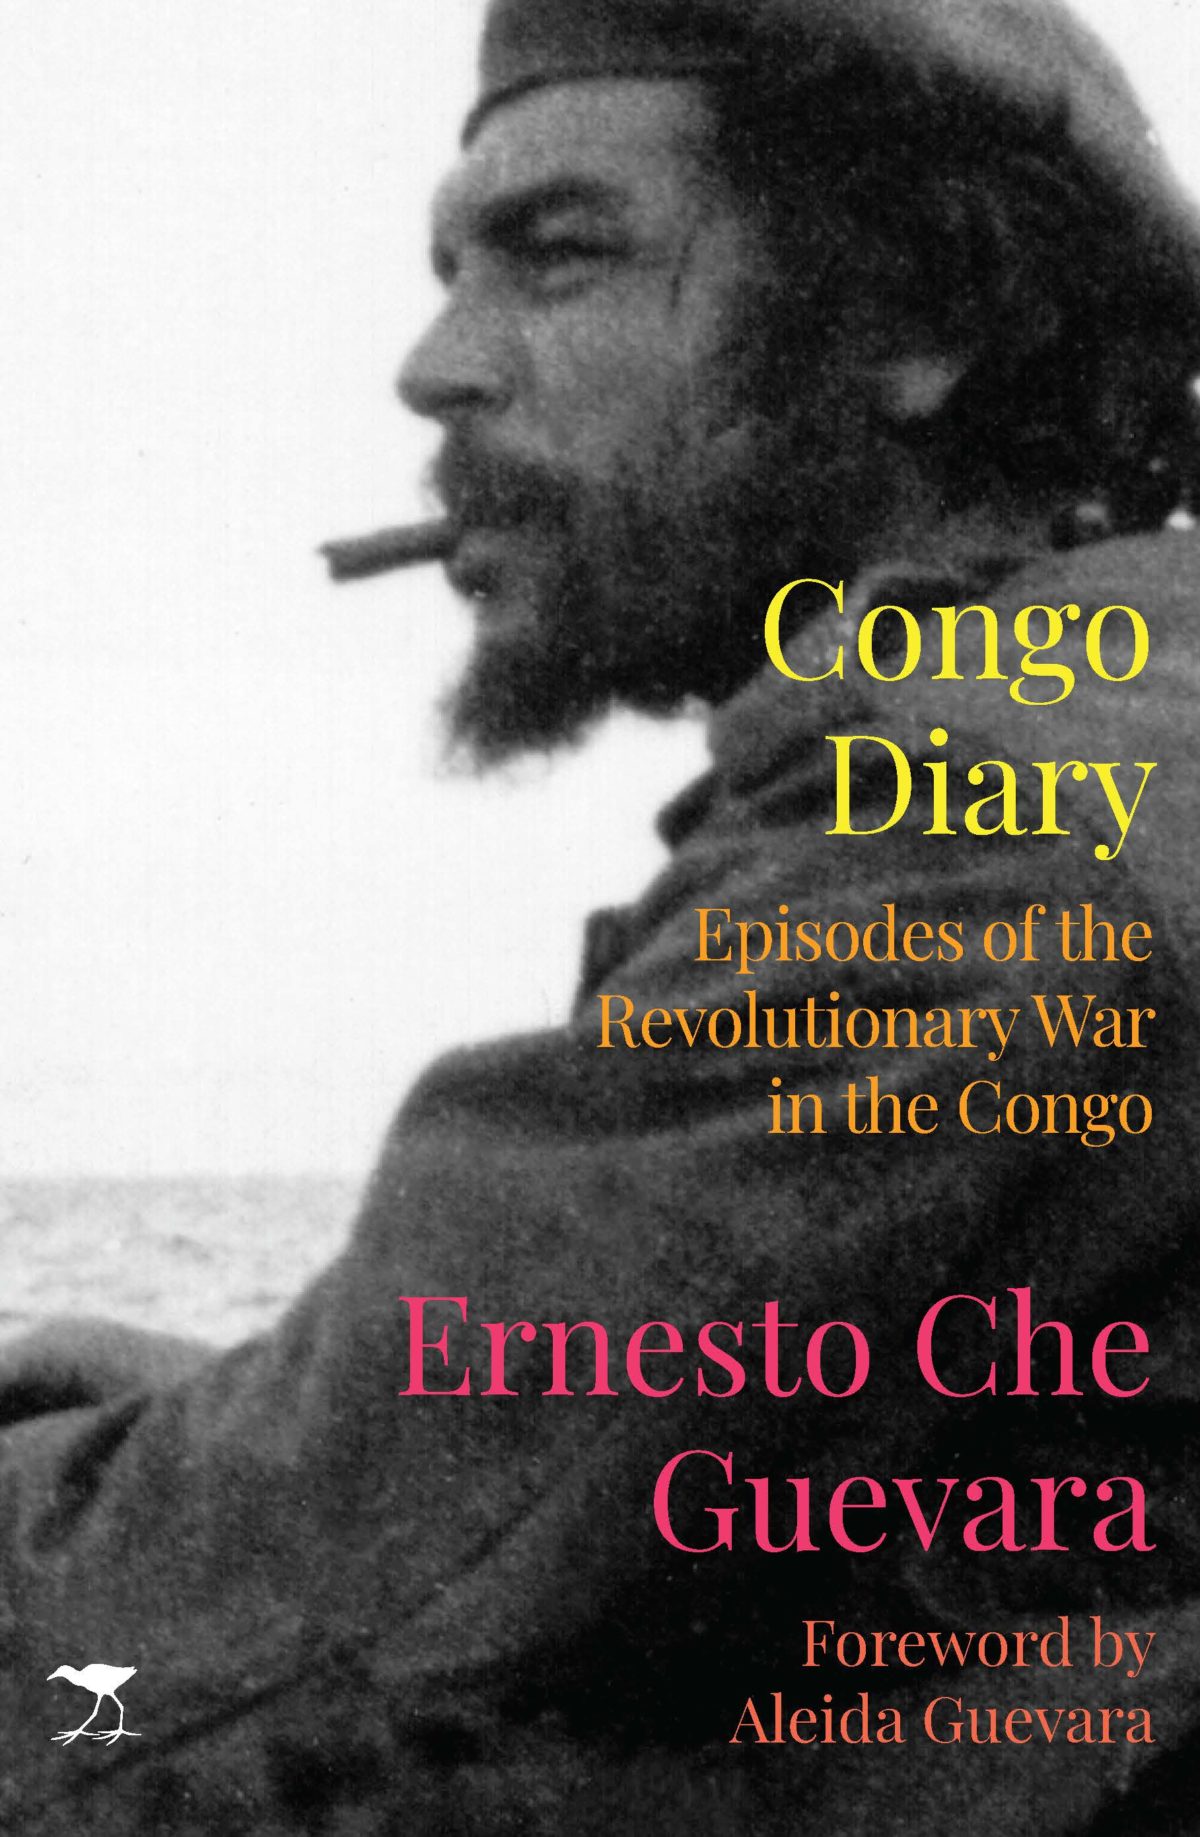 Congo Diaries